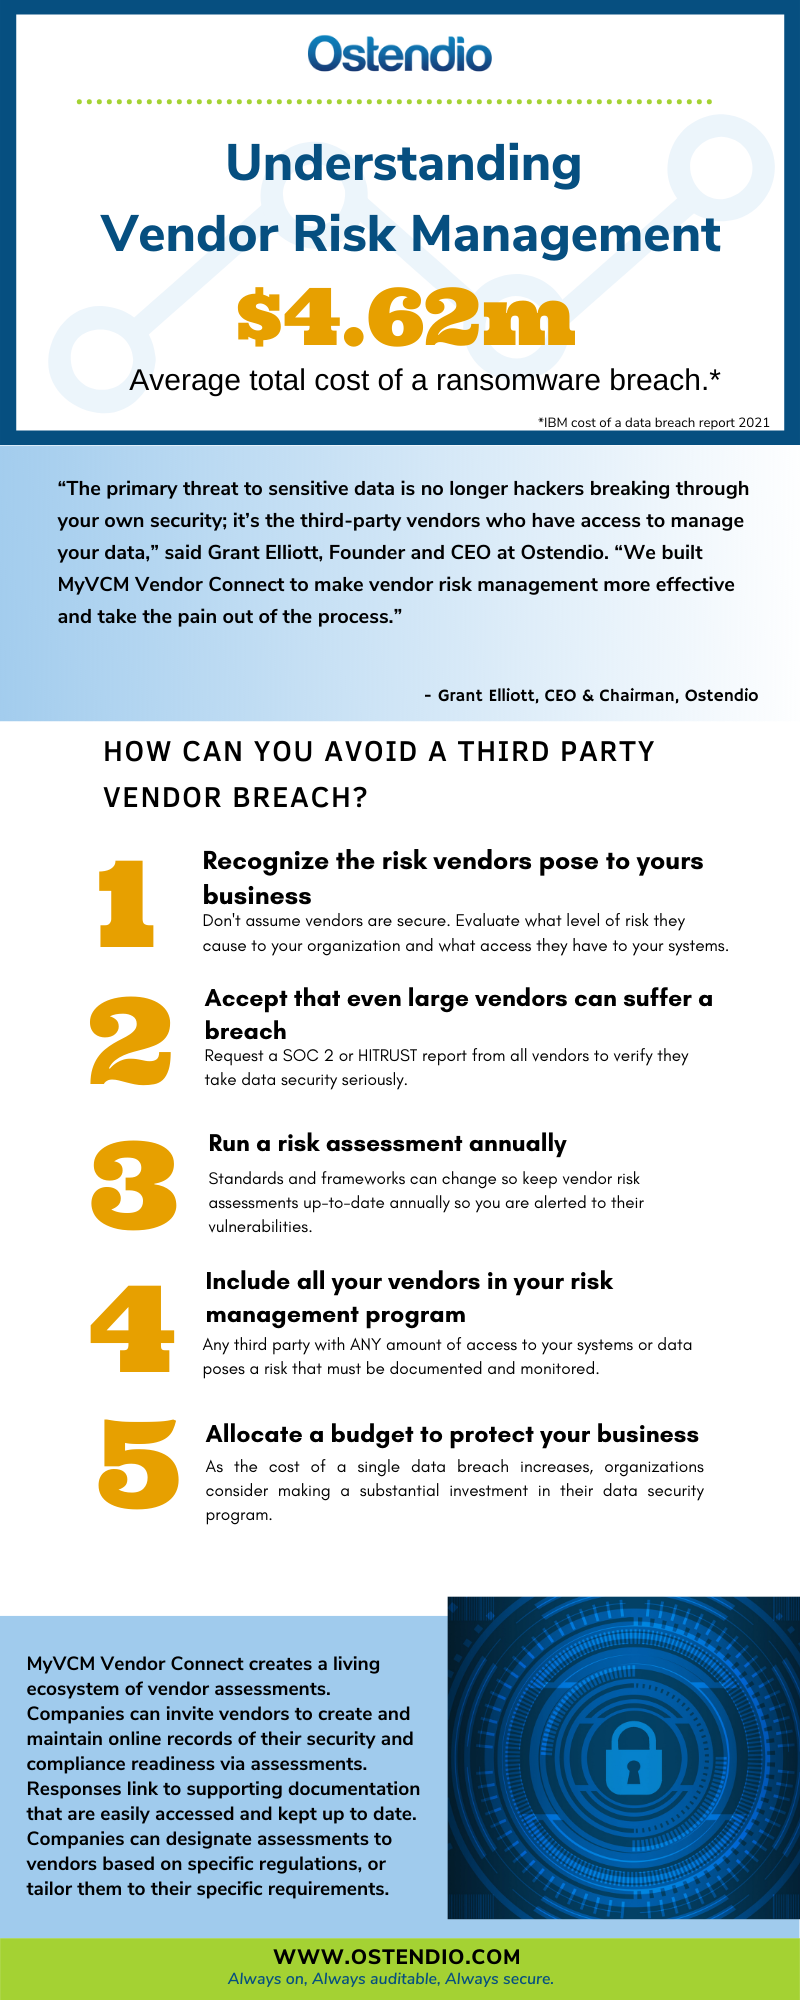 Vendor Risk Management infographic